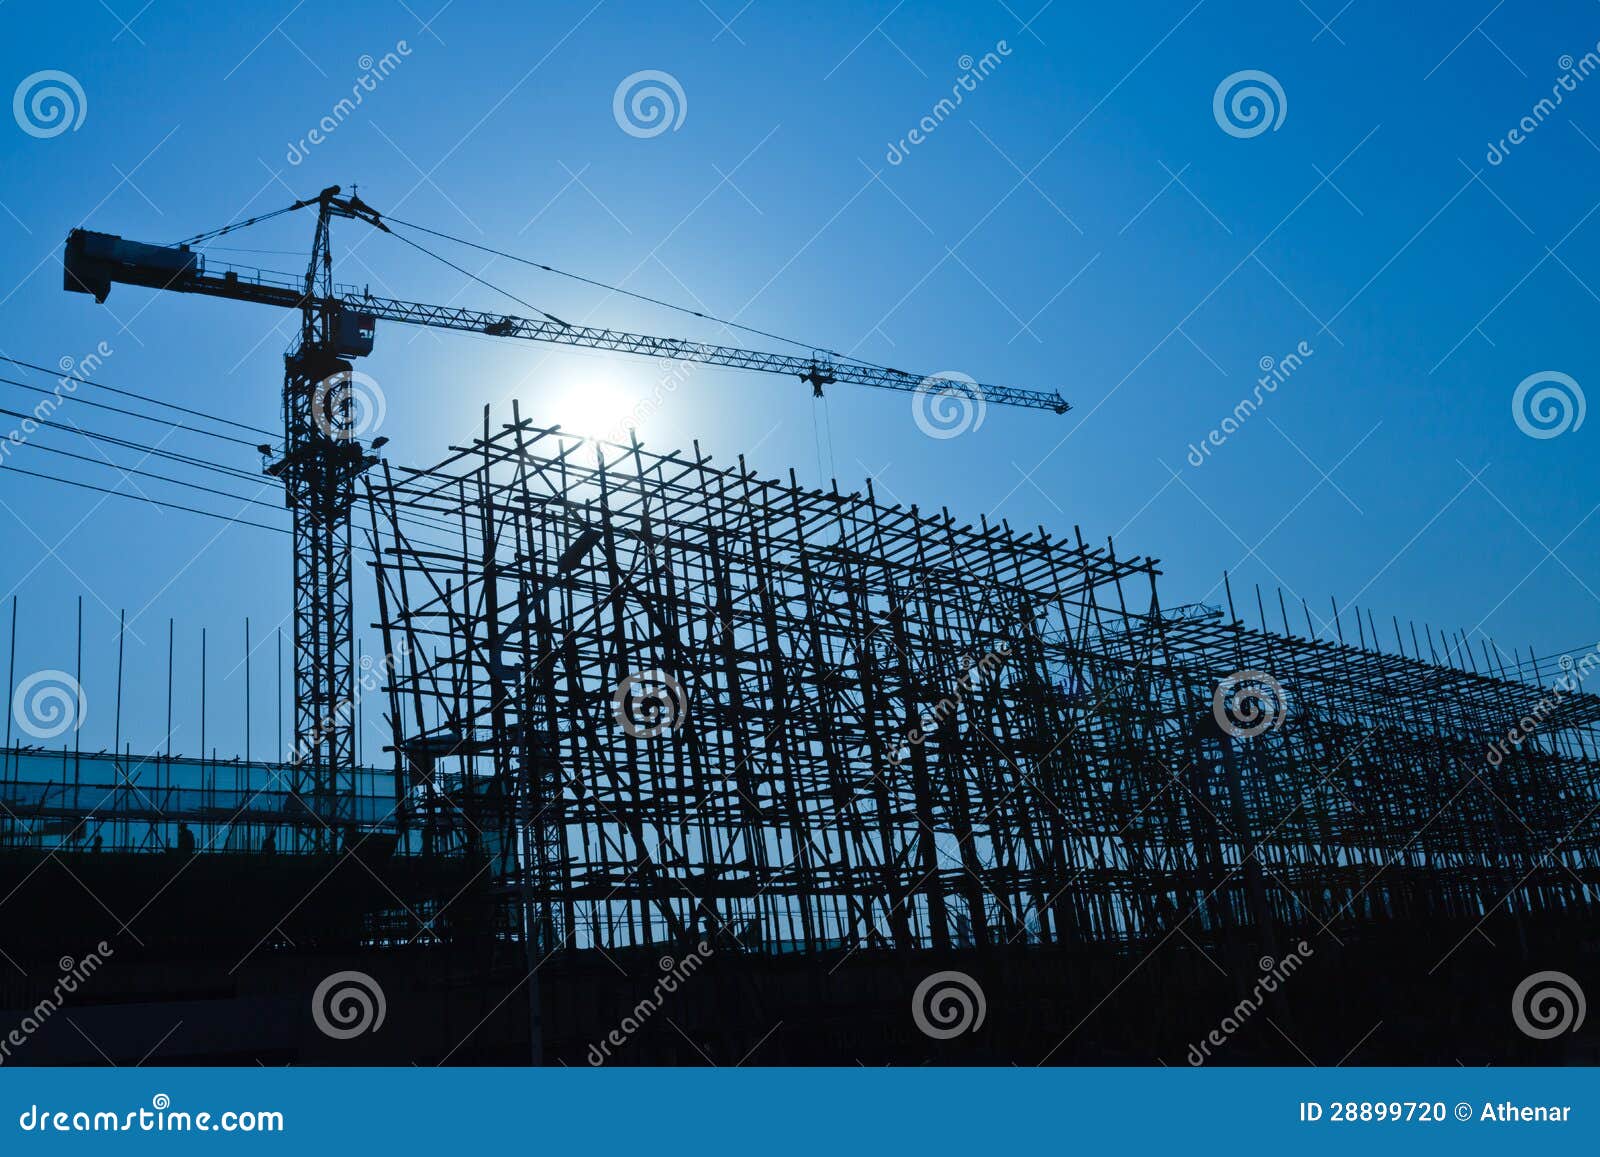 crane and building construction site